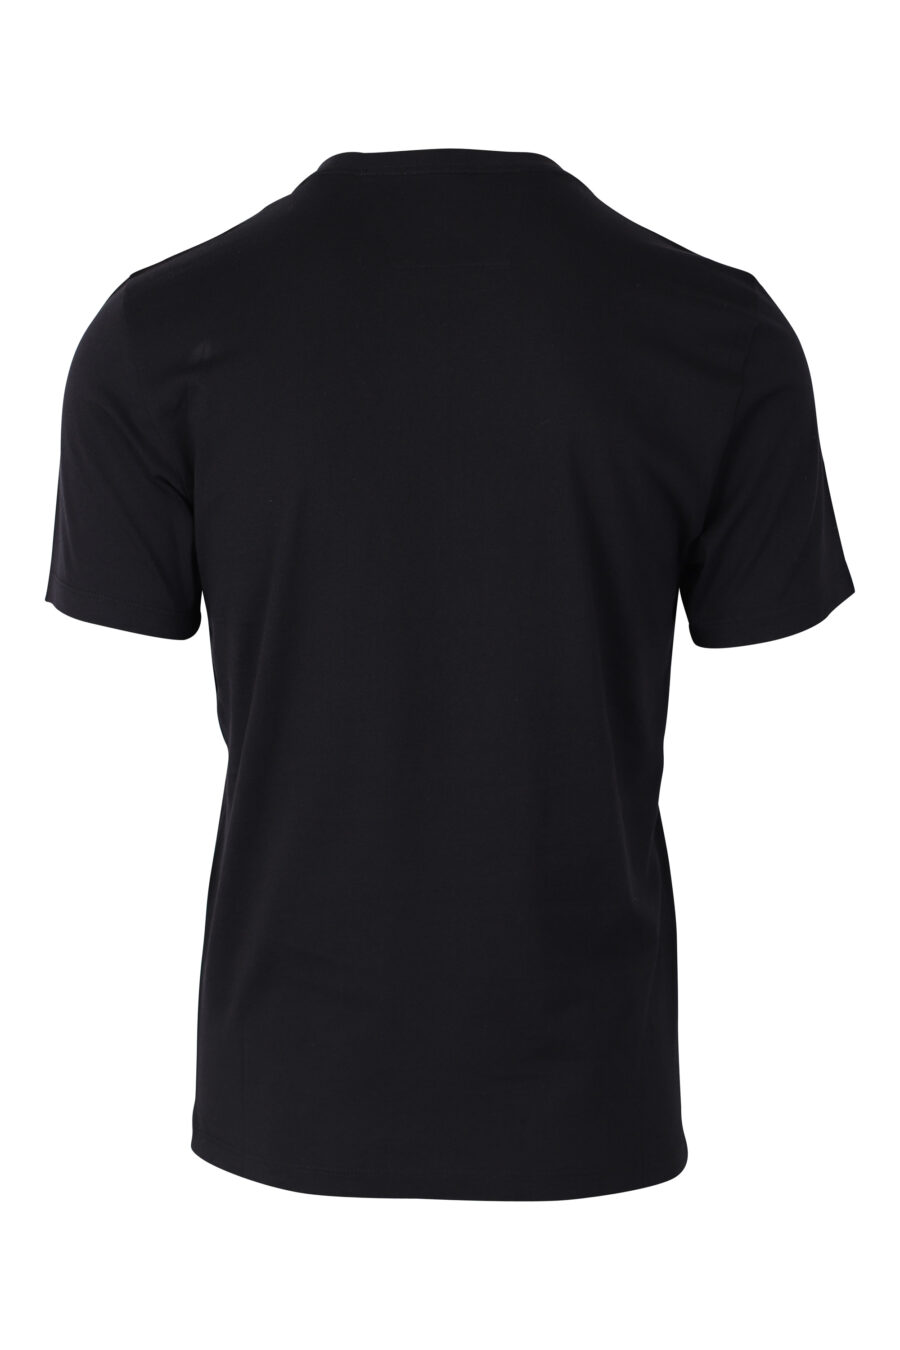 Camiseta negra con logotipo parche - IMG 2383